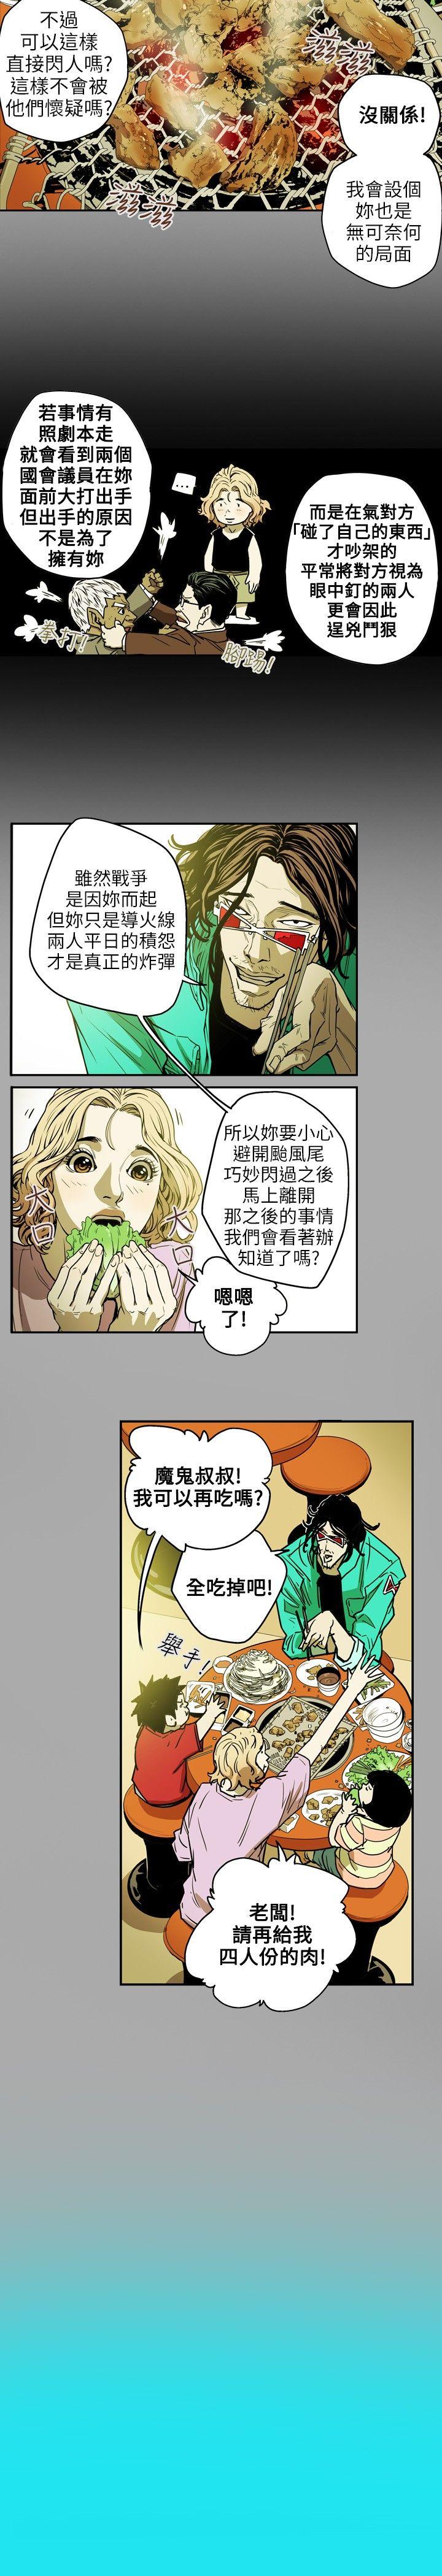 Honey trap 甜蜜陷阱  第24话 漫画图片3.jpg